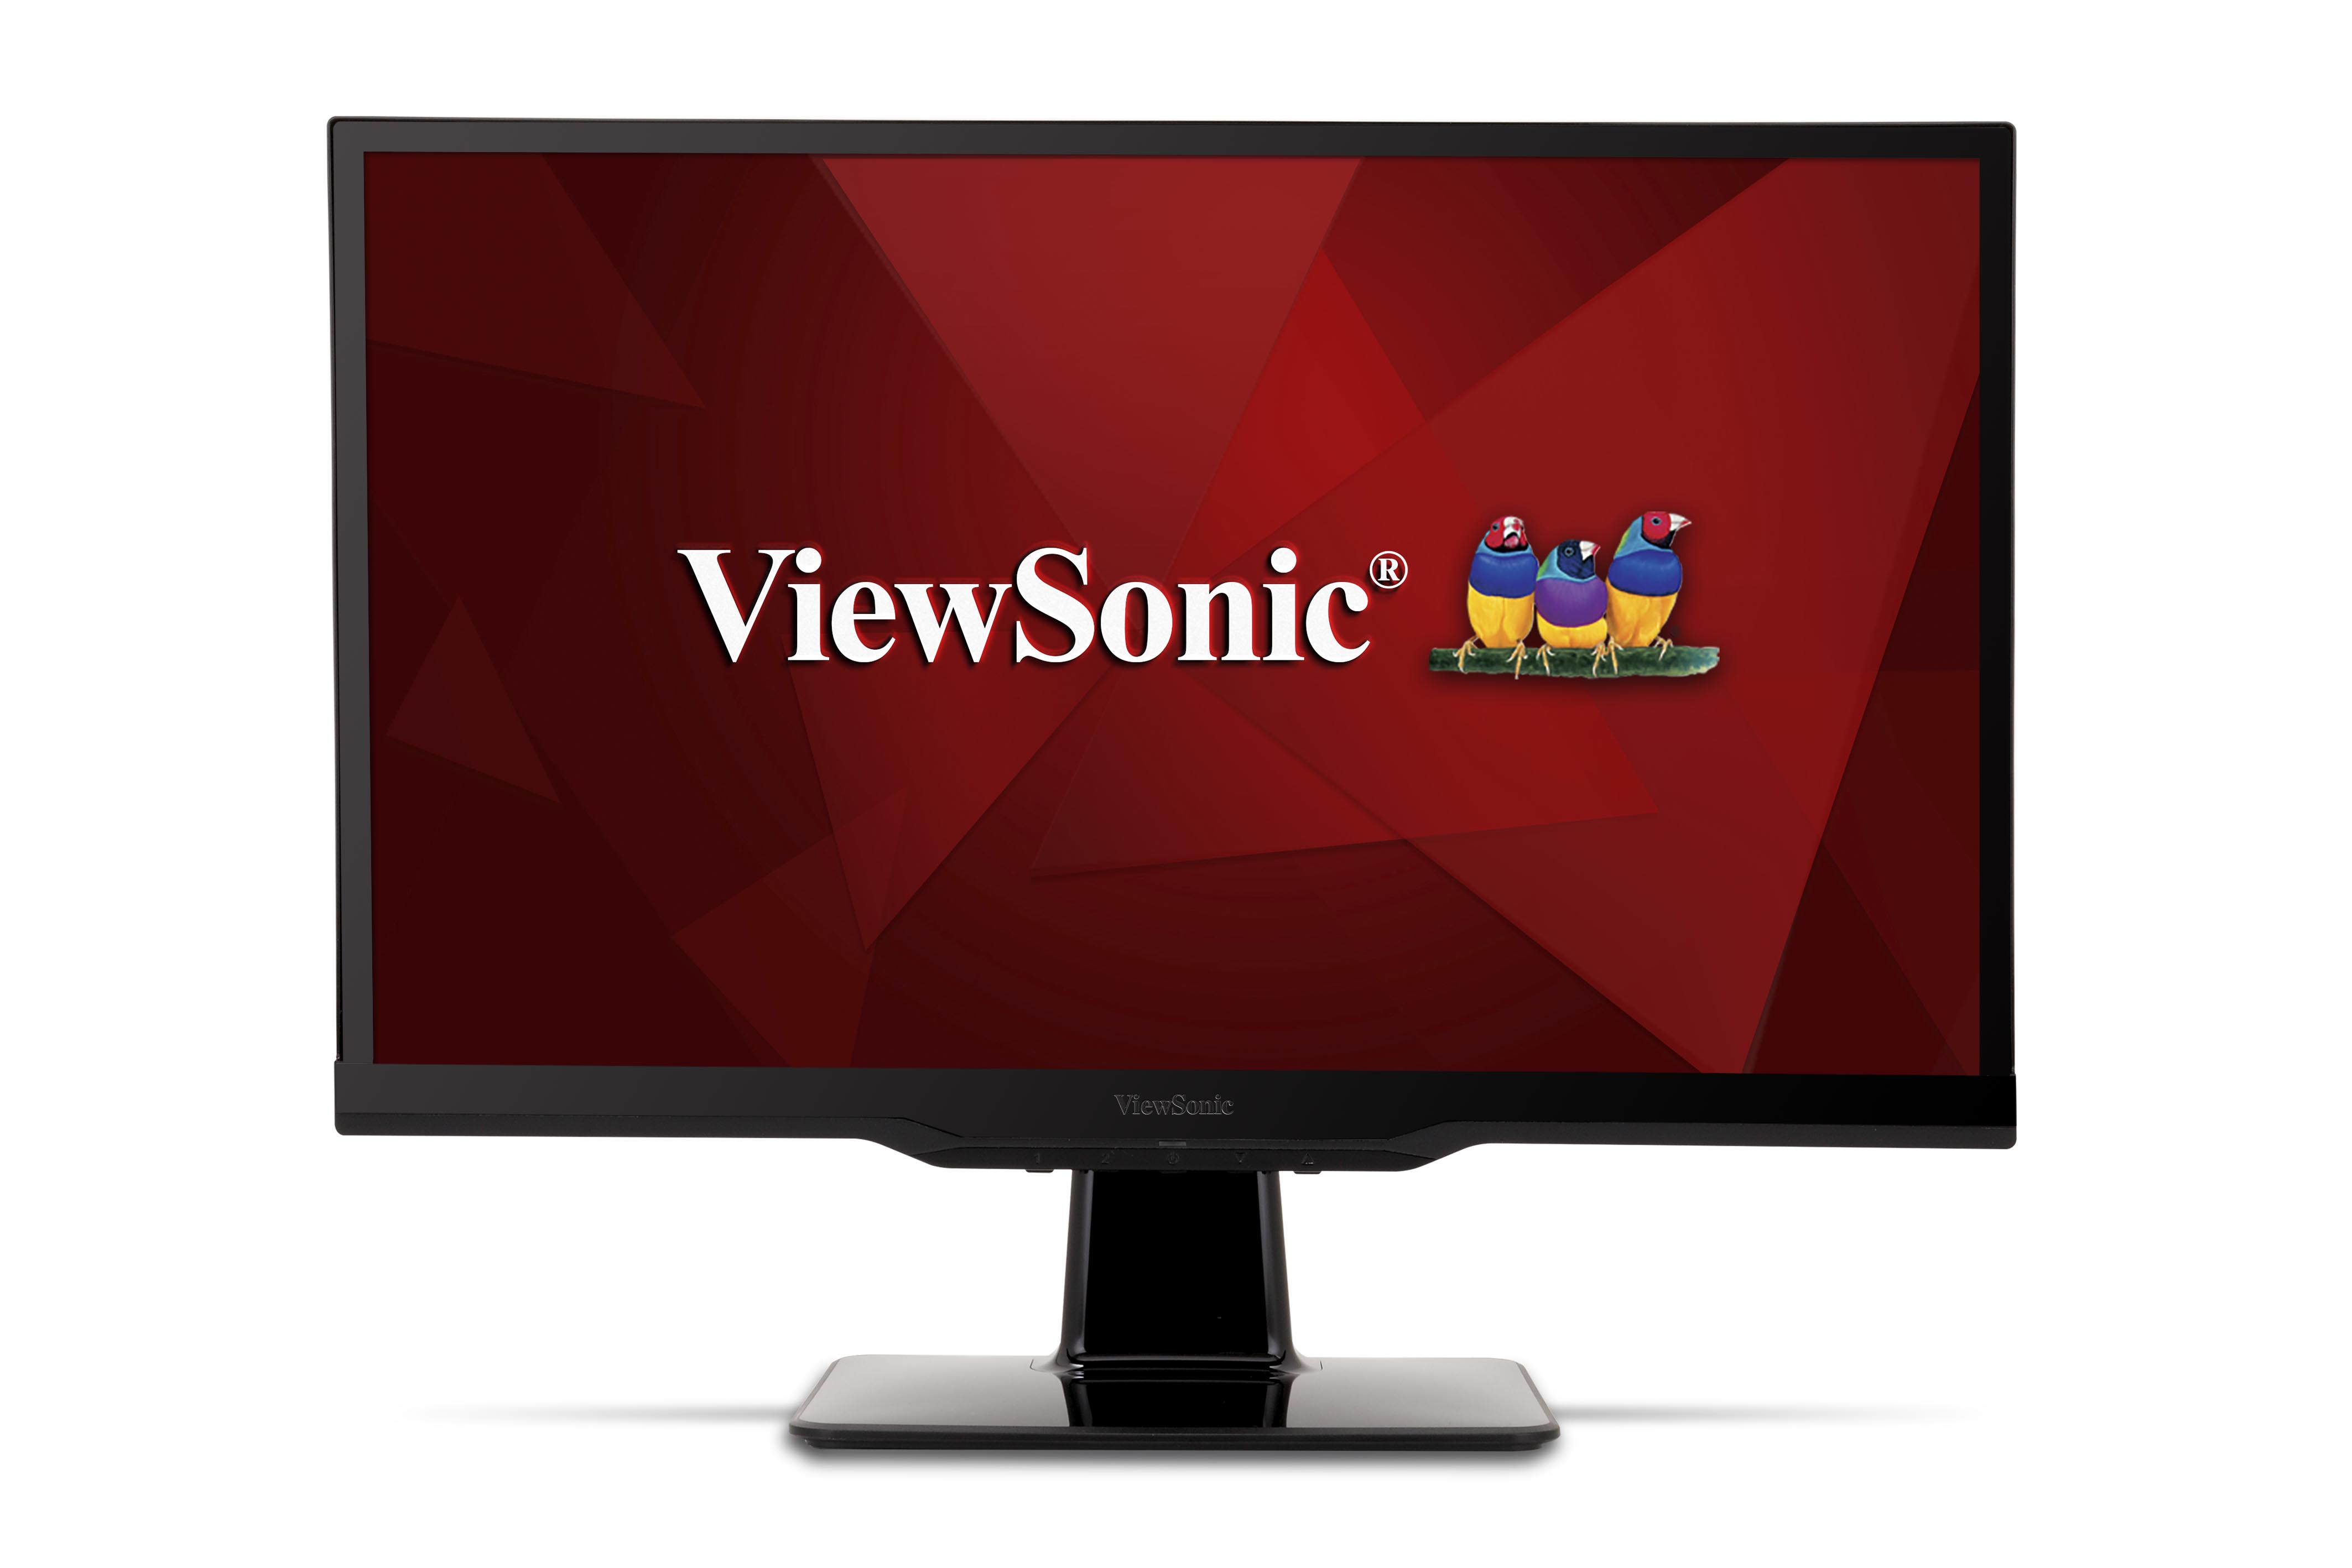 viewsonic vx2235wm driver windows 10